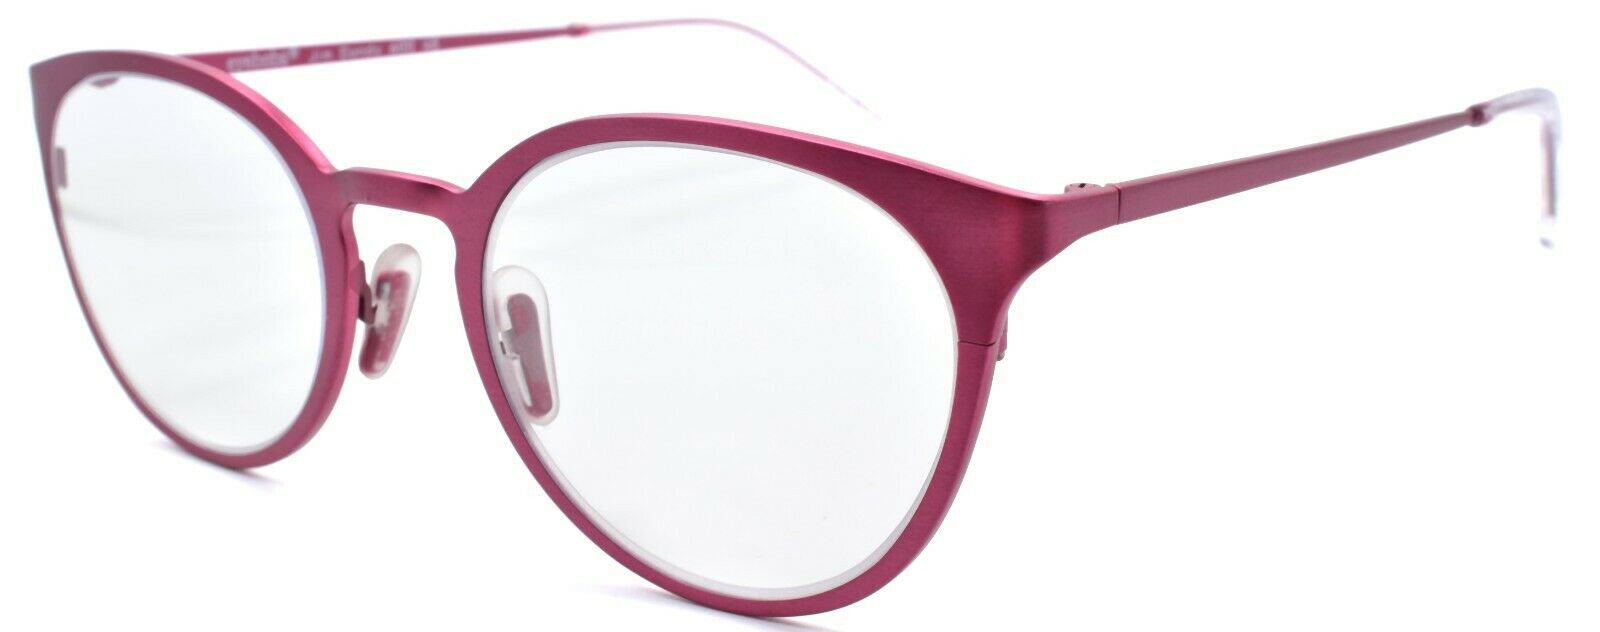 1-Eyebobs Jim Dandy 600 45 Reading Glasses Pink +1.50-842754137690-IKSpecs